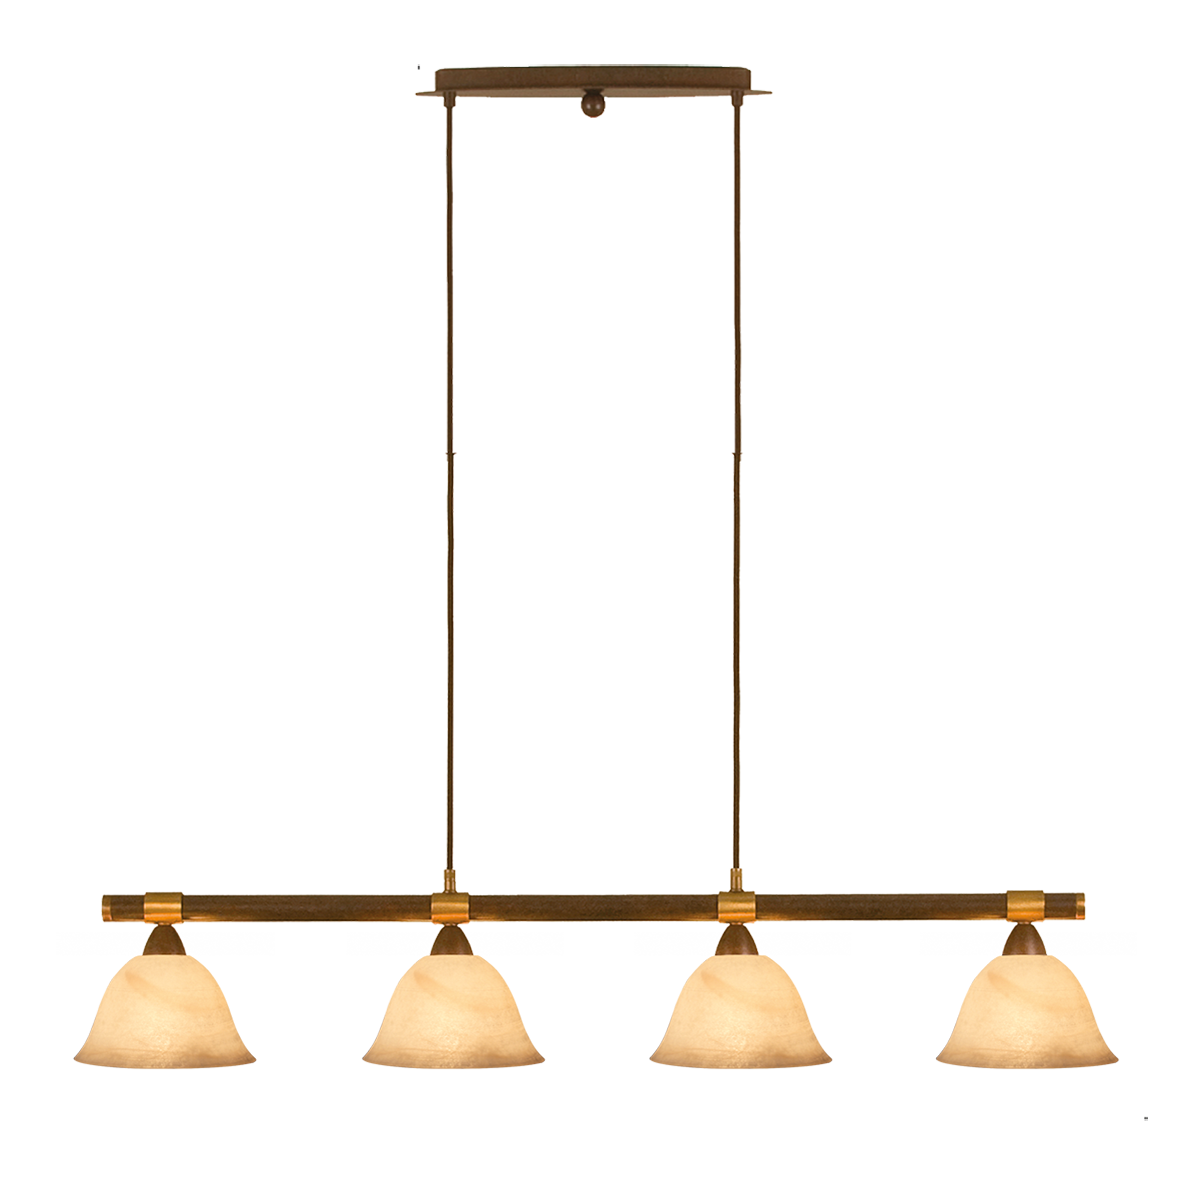 Balken 4 x E14, L=84cm, Eisen  braun-schwarz, Messing antik, incl.Schirme oder Gläser